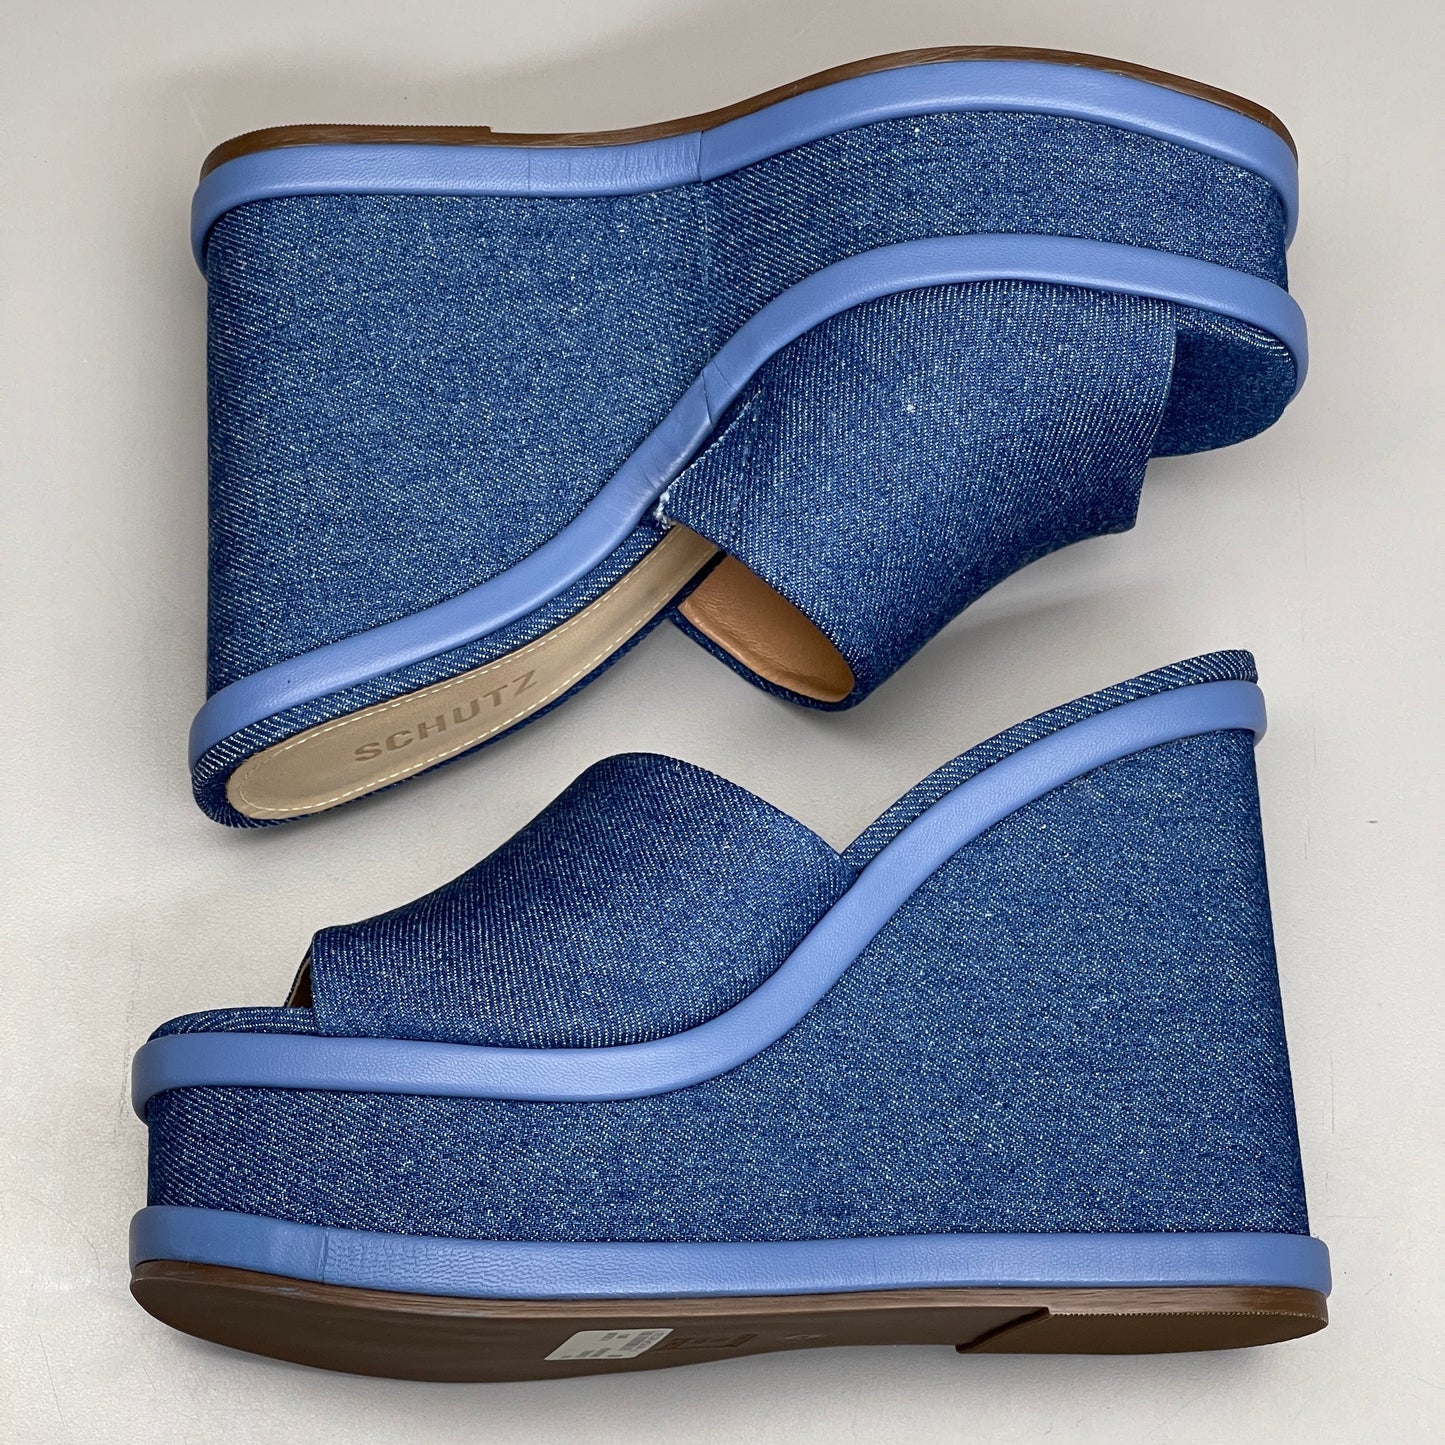 SCHUTZ Dalle Denim Women's Wedge Sandal Blue Platform Shoe Sz 5B (New)